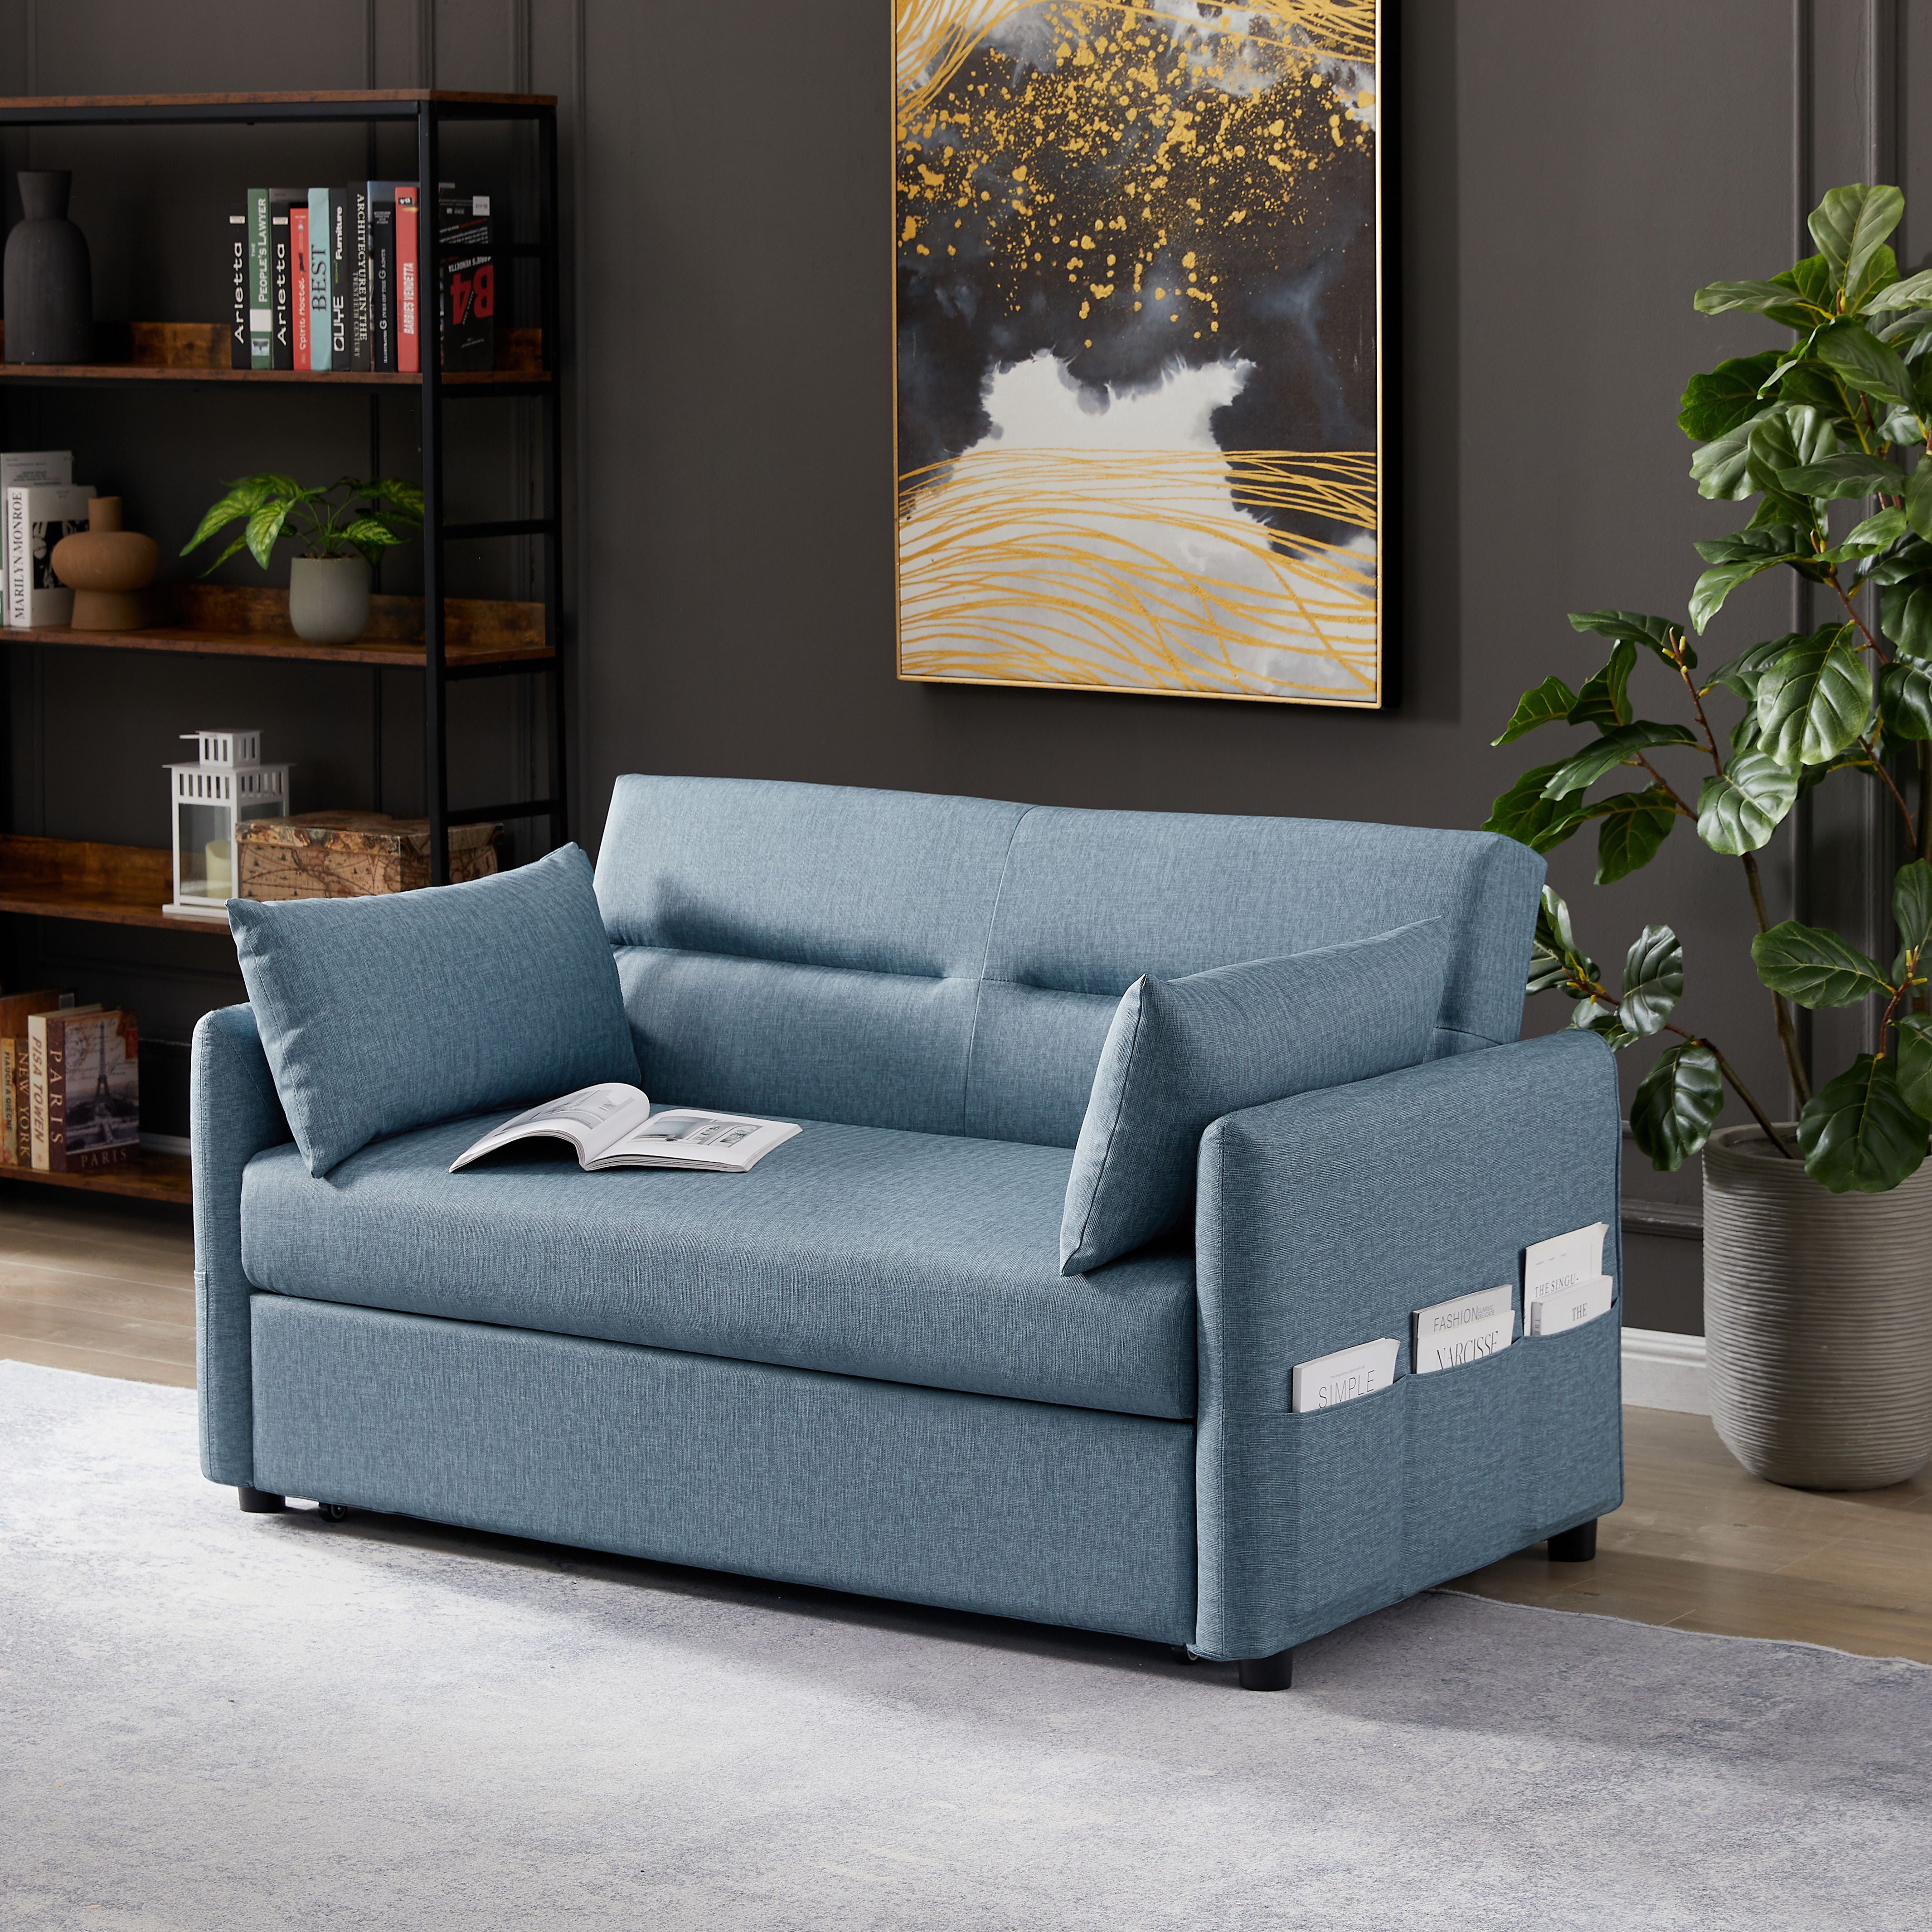 2033 Sky Blue Cloth Grain Leather (PU) Leisure Two-Seat Sofa